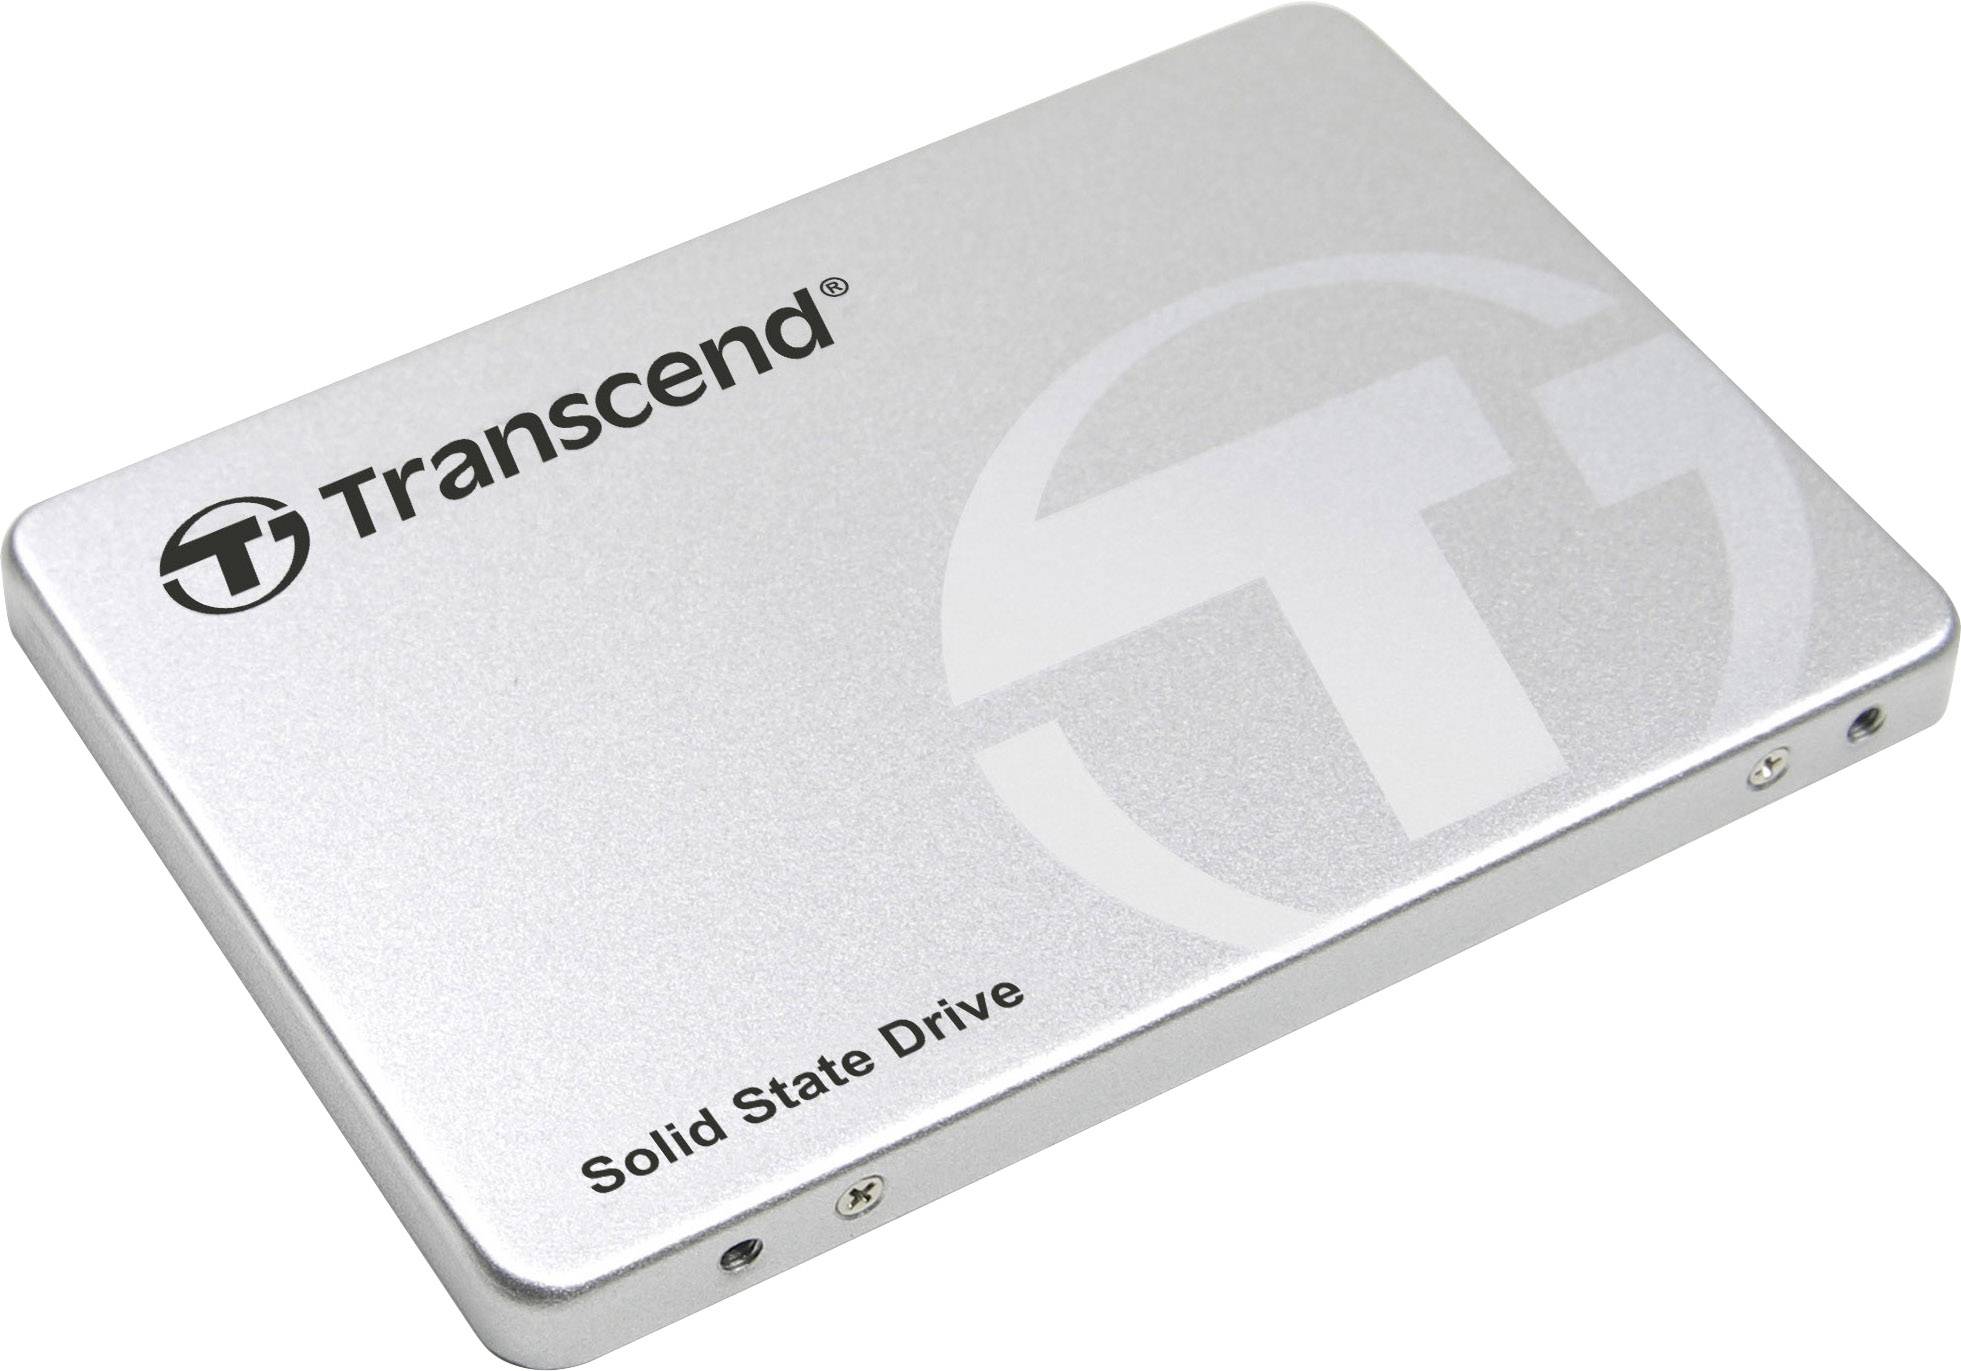 1TB SSD TRANSCEND SSD 370S-Serie